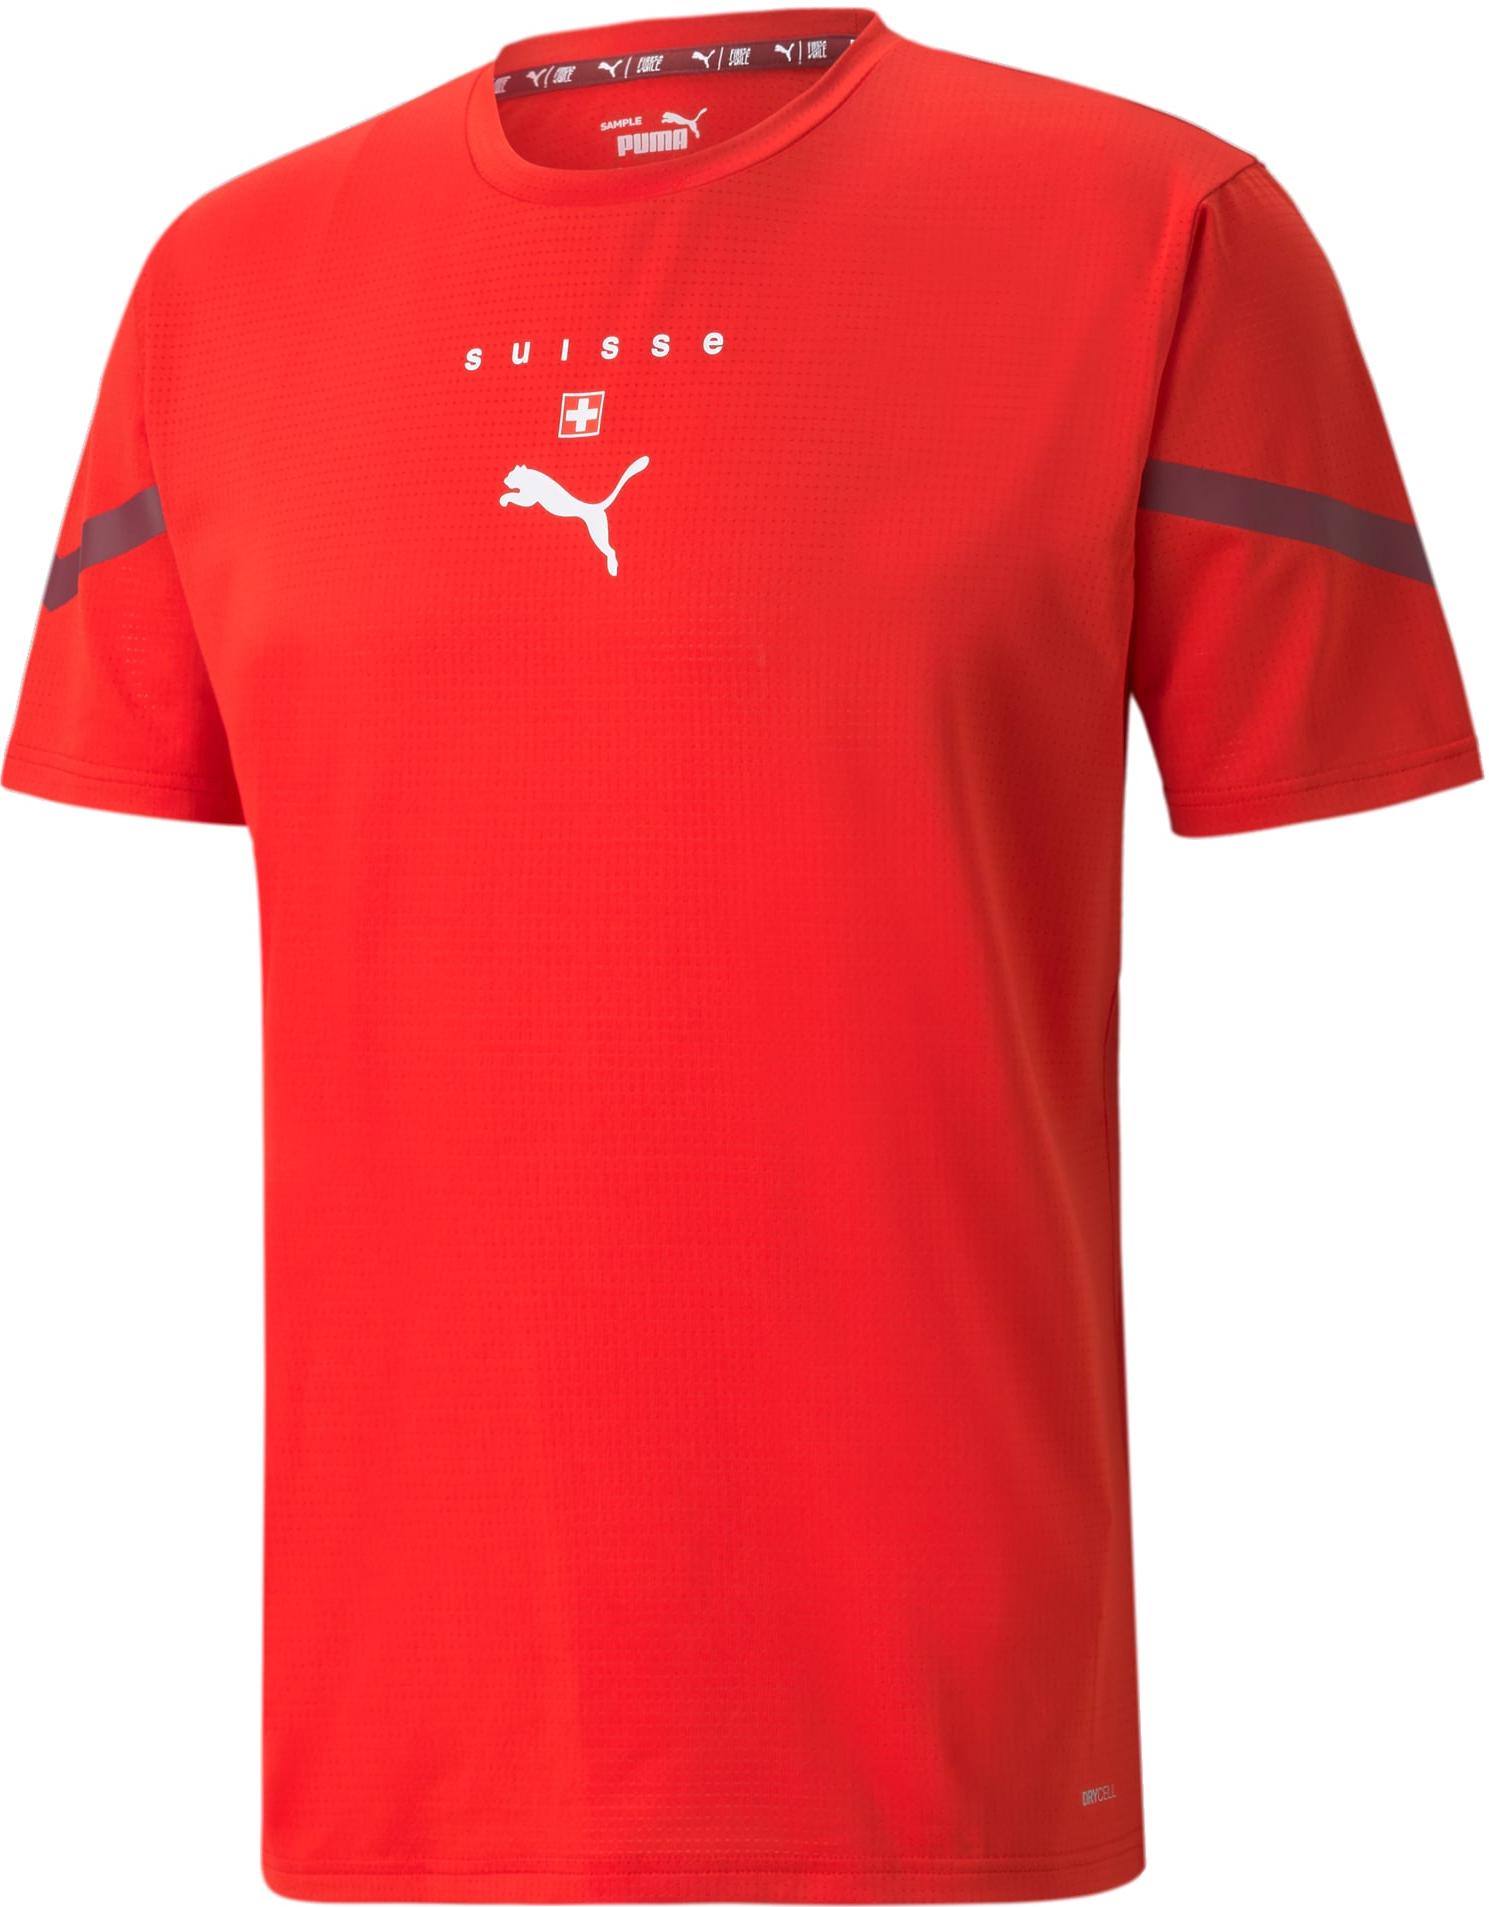 T-shirt Puma Switzerland Prematch Men's Jersey 2021/22